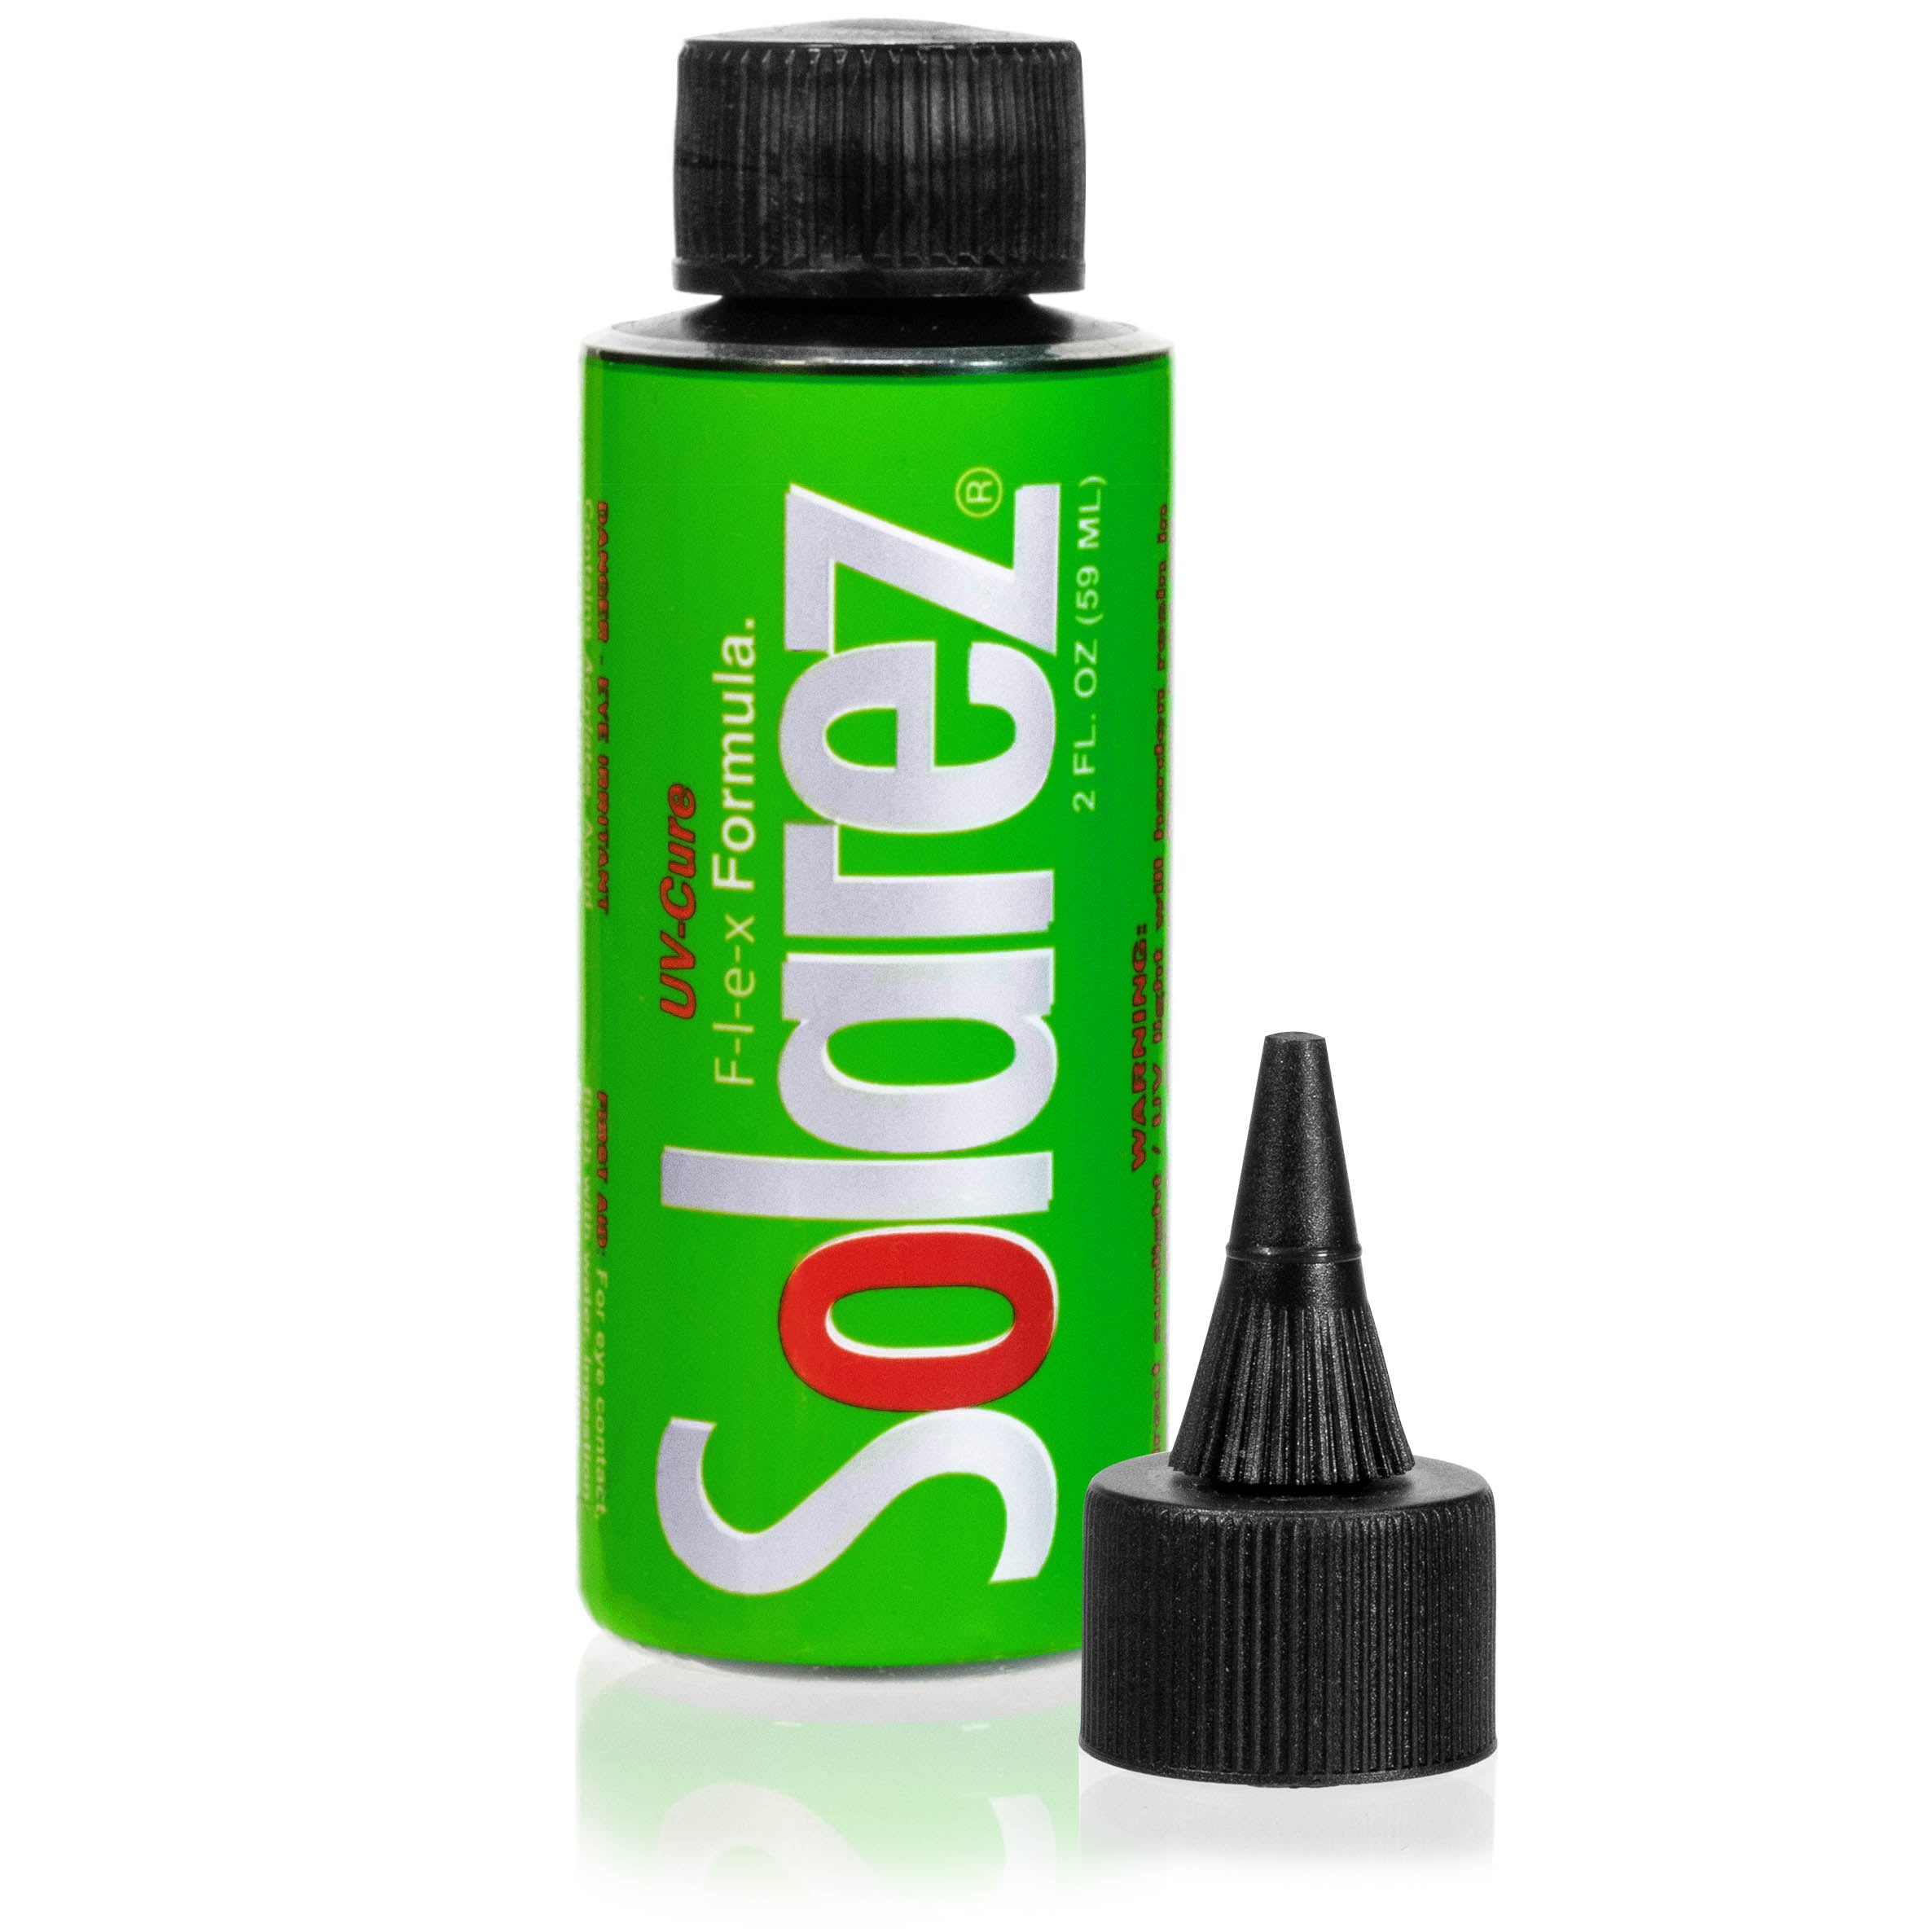 Solarez UV-Cure Fly Tie Flex Formula